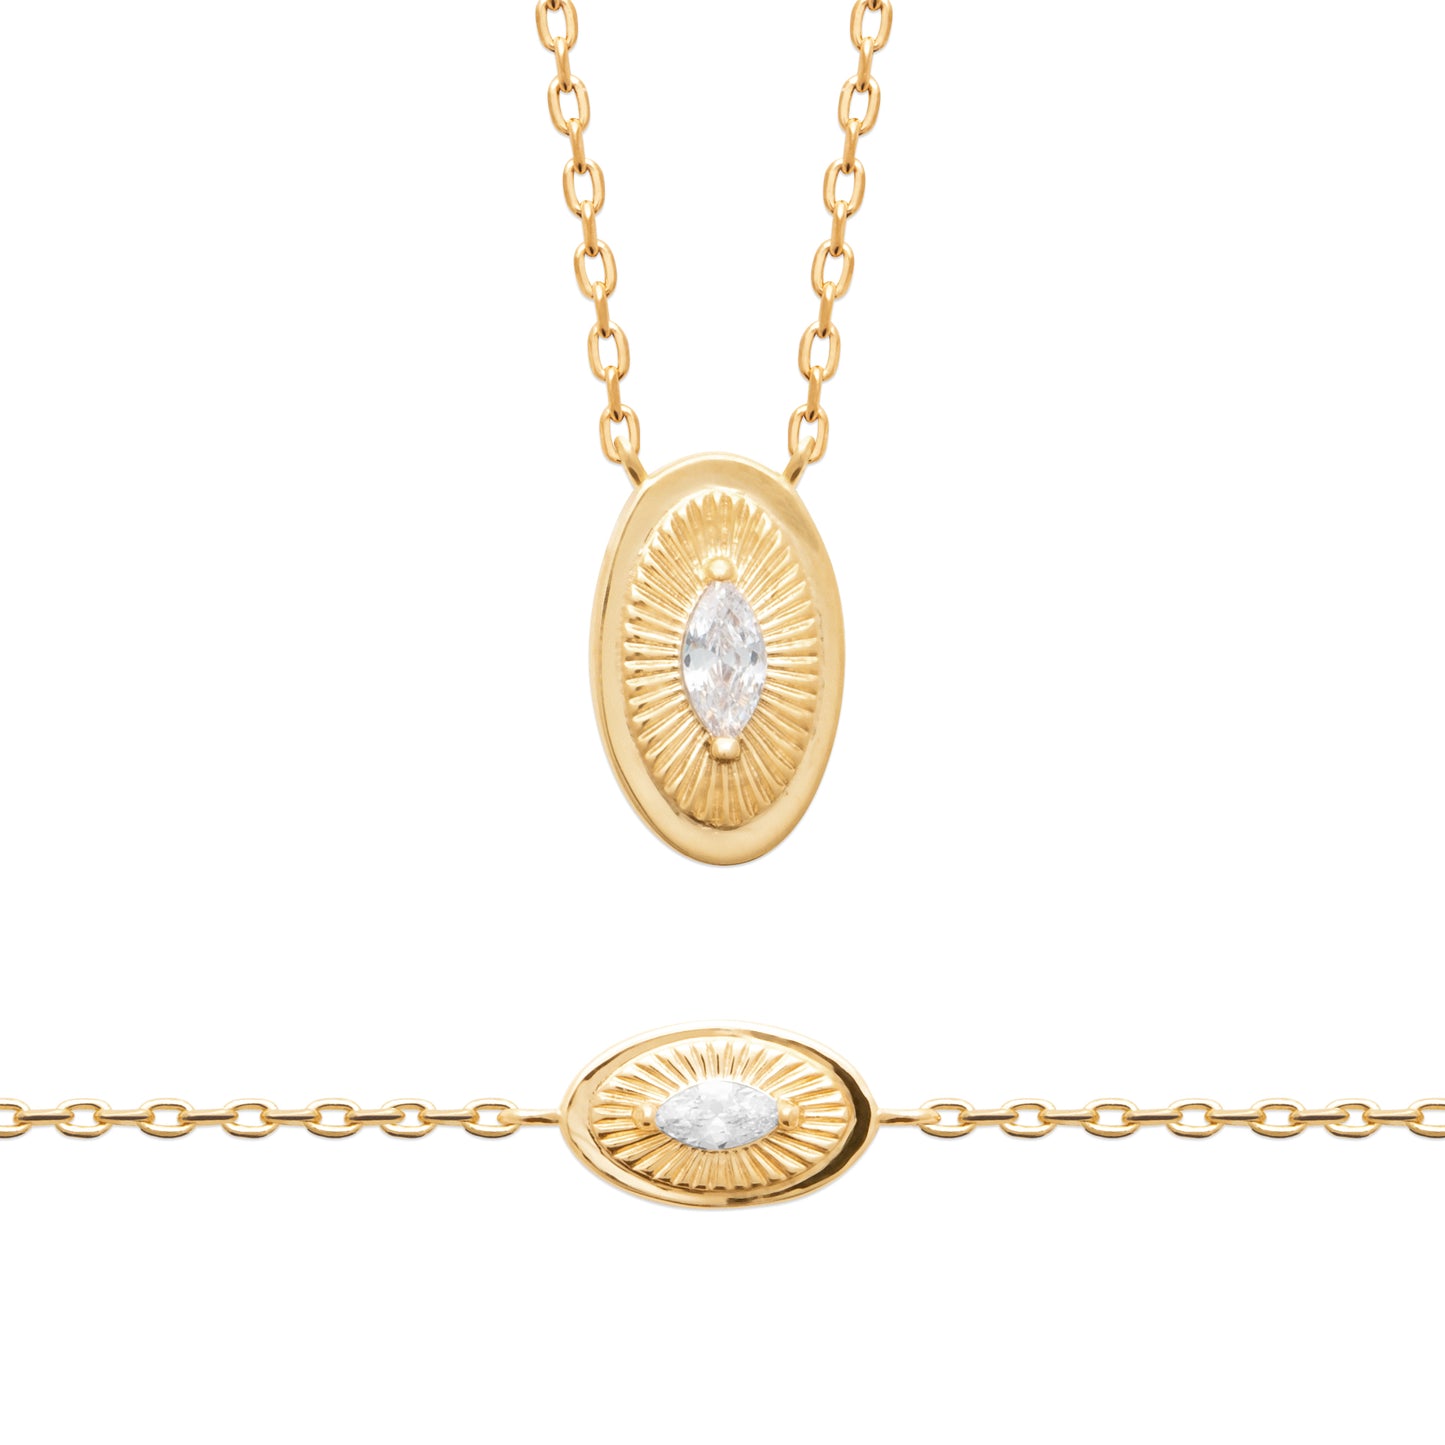 Narcisse - Bracelet en Plaqué Or - Yasmeen Jewelry